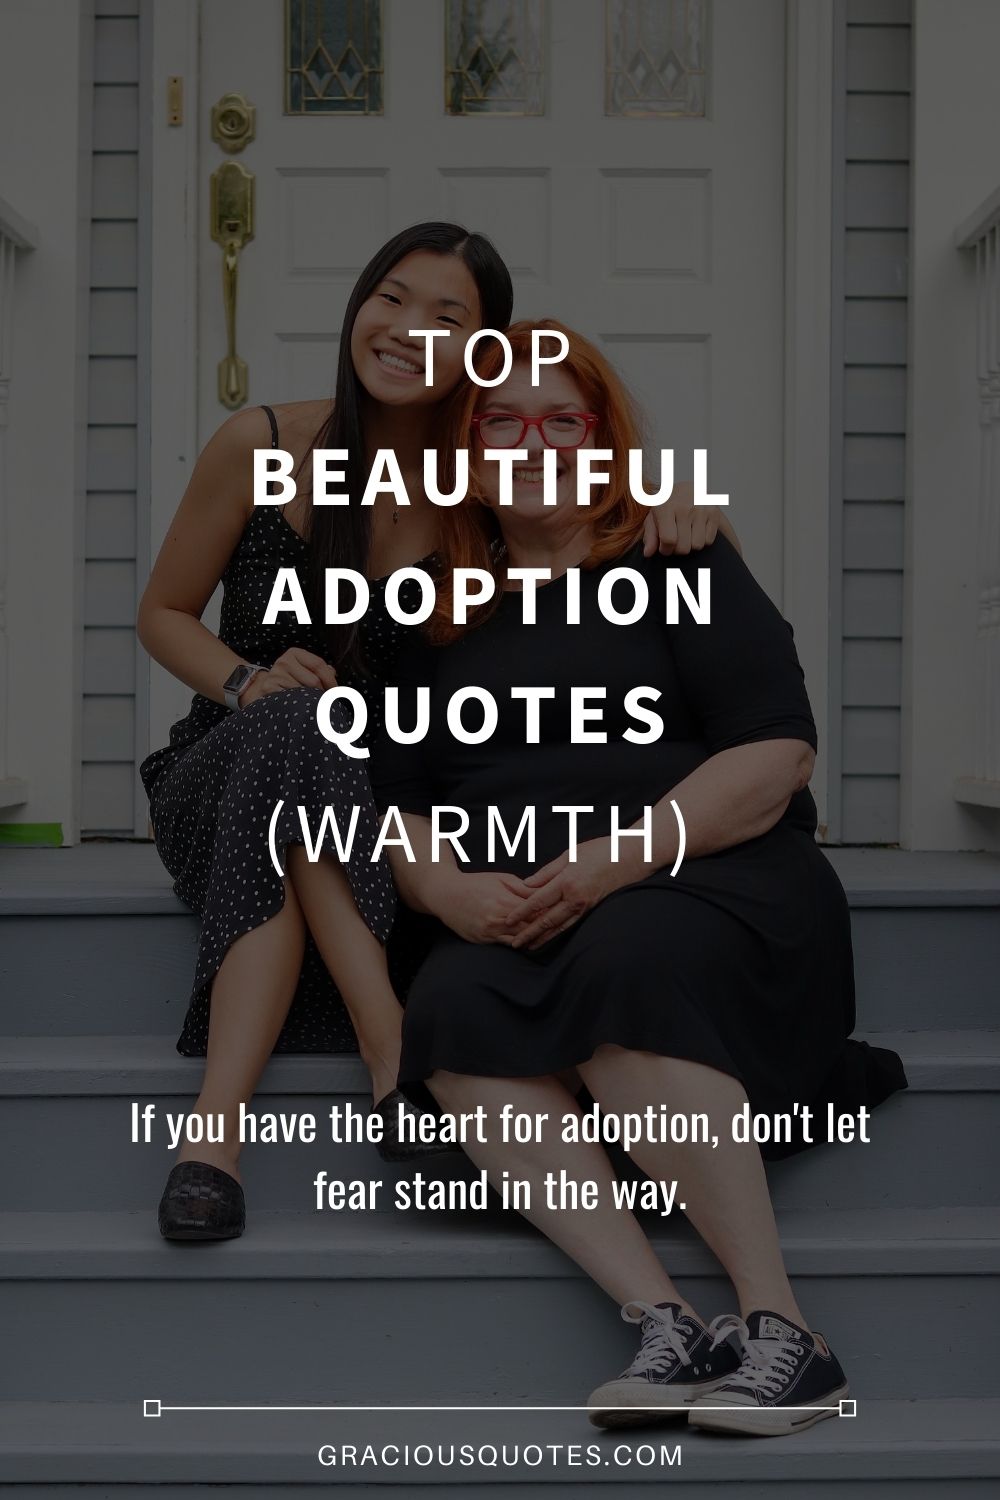 Top Beautiful Adoption Quotes (WARMTH) - Gracious Quotes